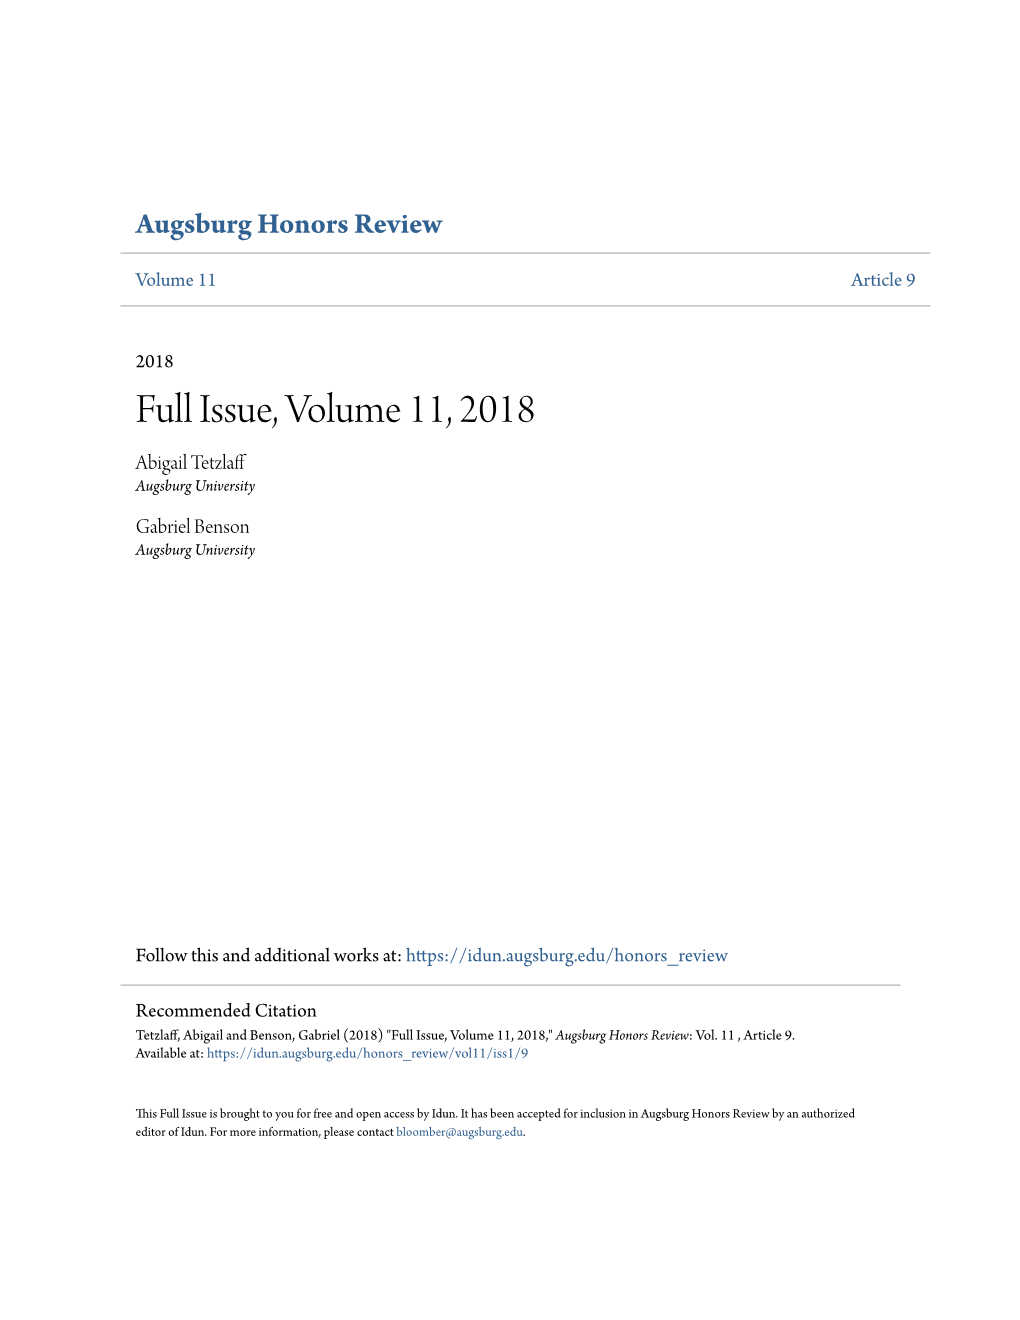 Full Issue, Volume 11, 2018 Abigail Tetzlaff Augsburg University